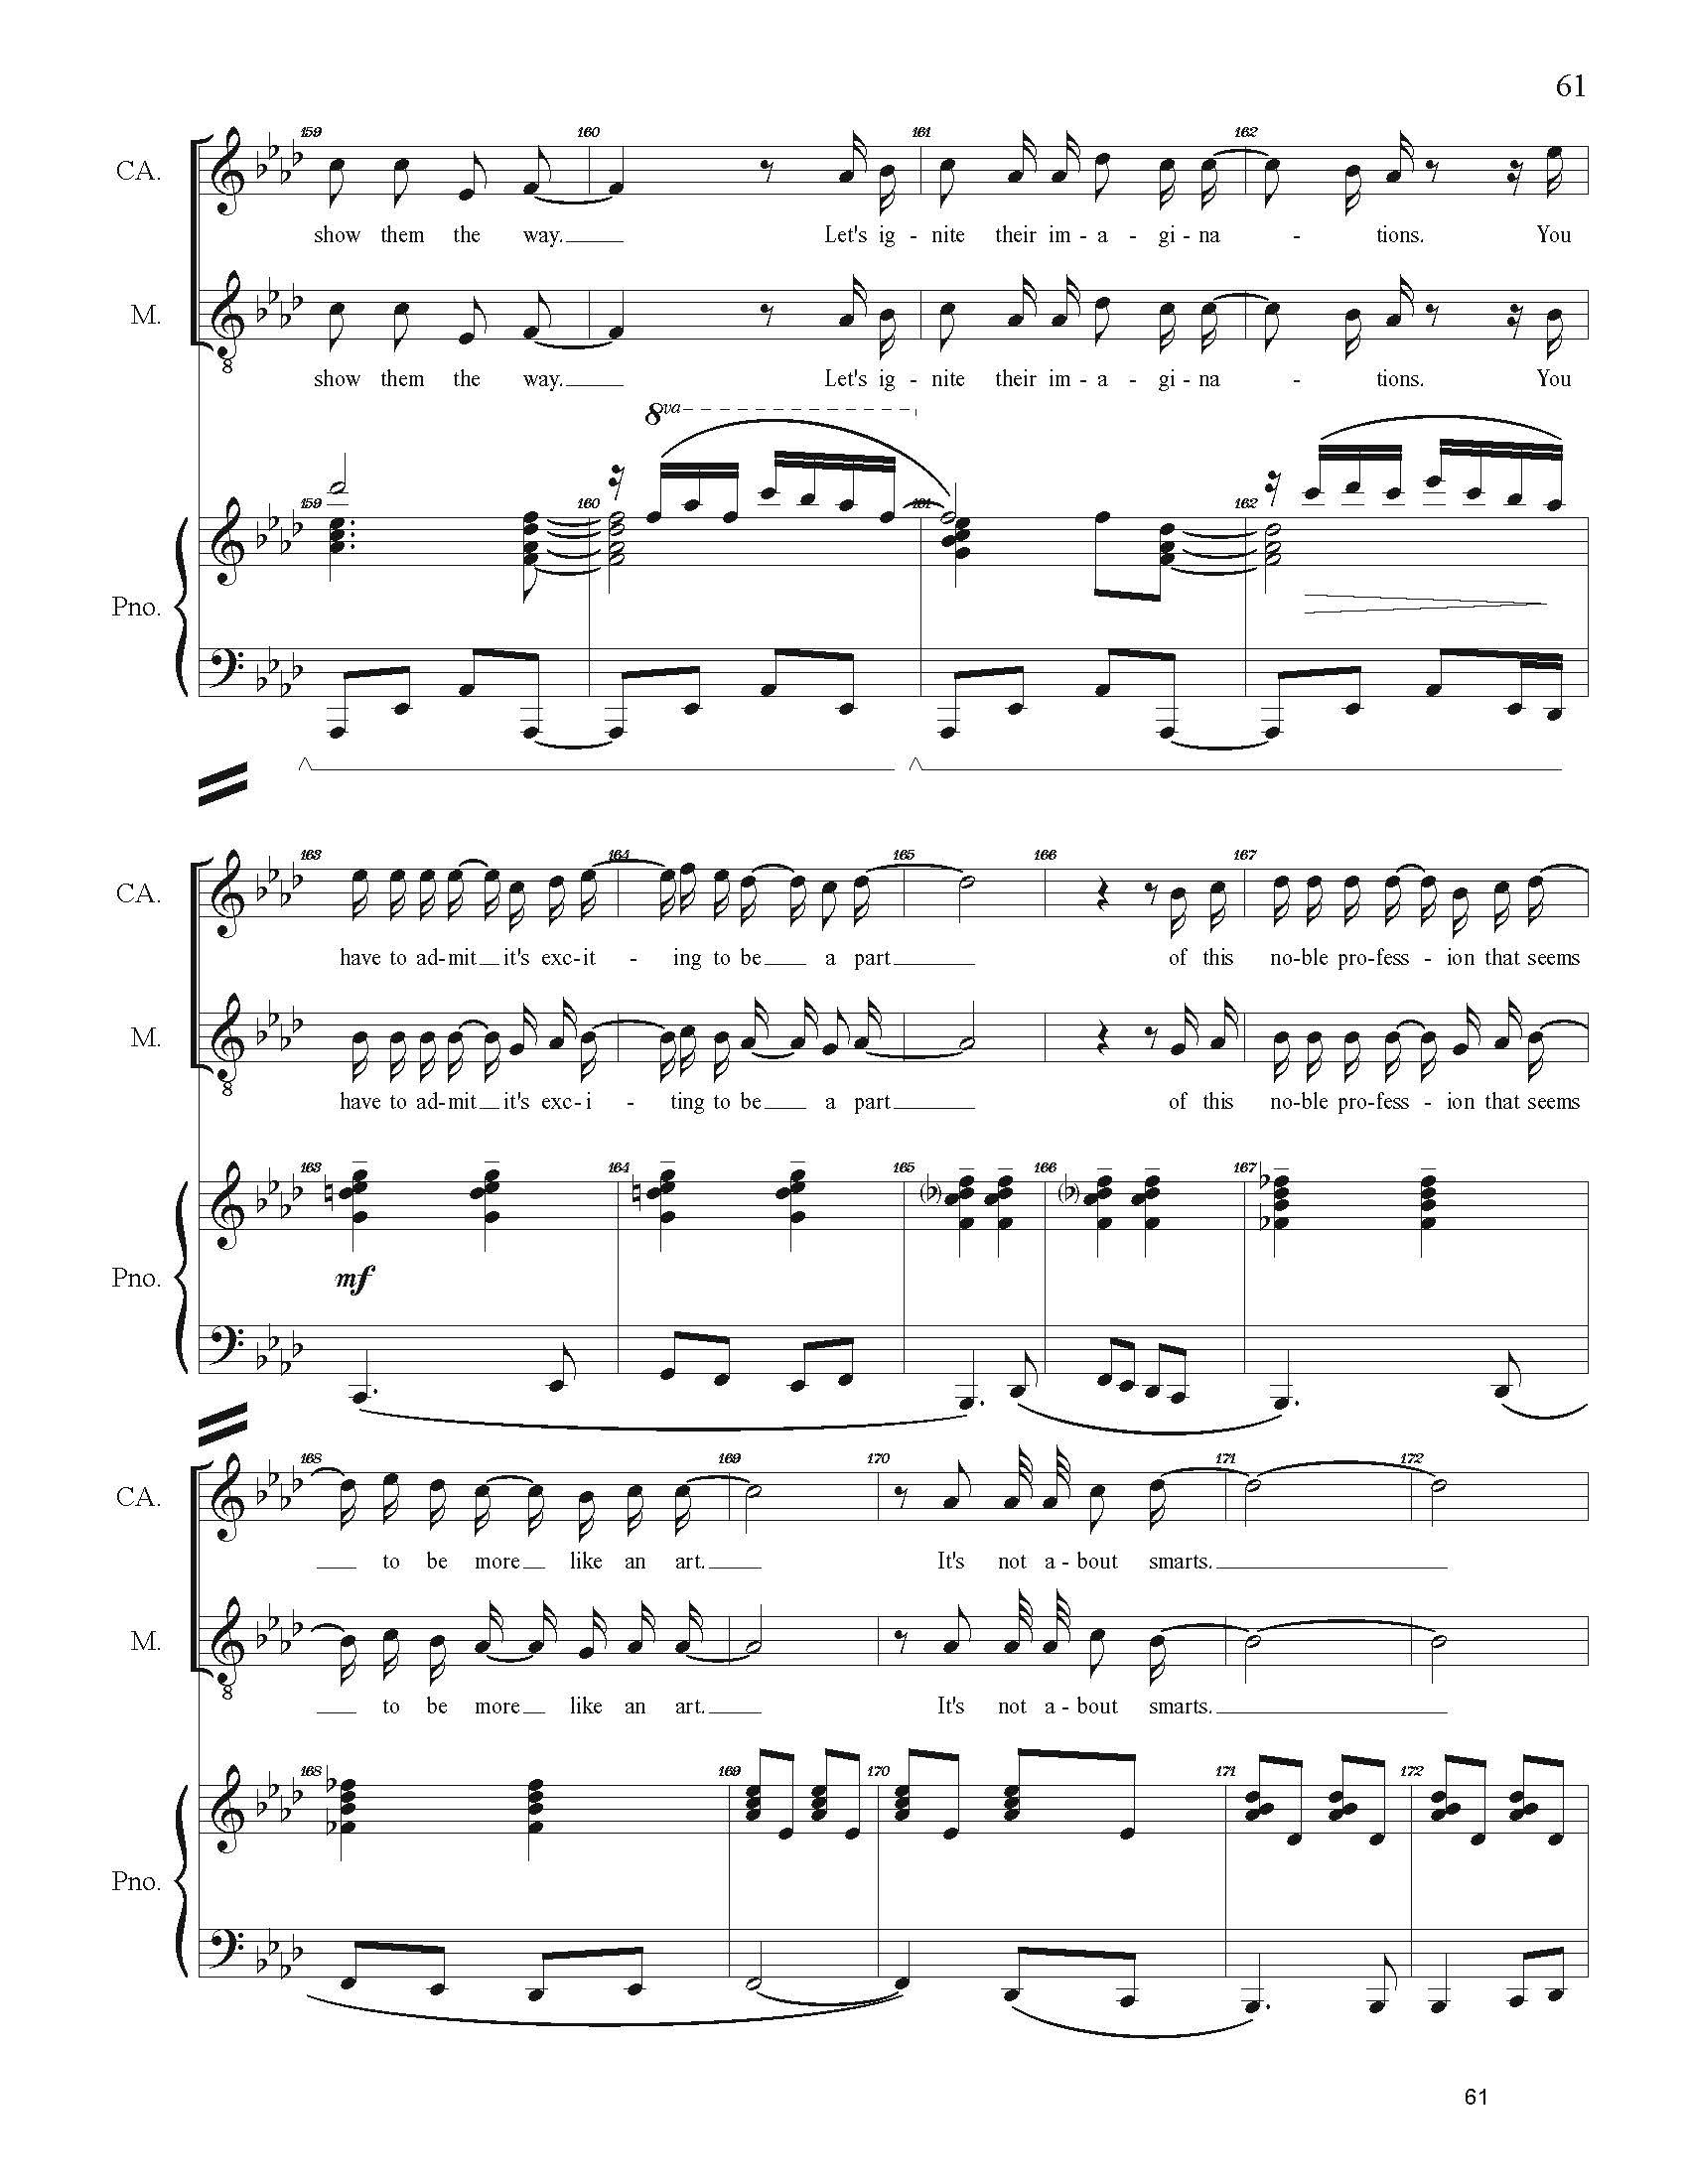 FULL PIANO VOCAL SCORE DRAFT 1 - Score_Page_061.jpg